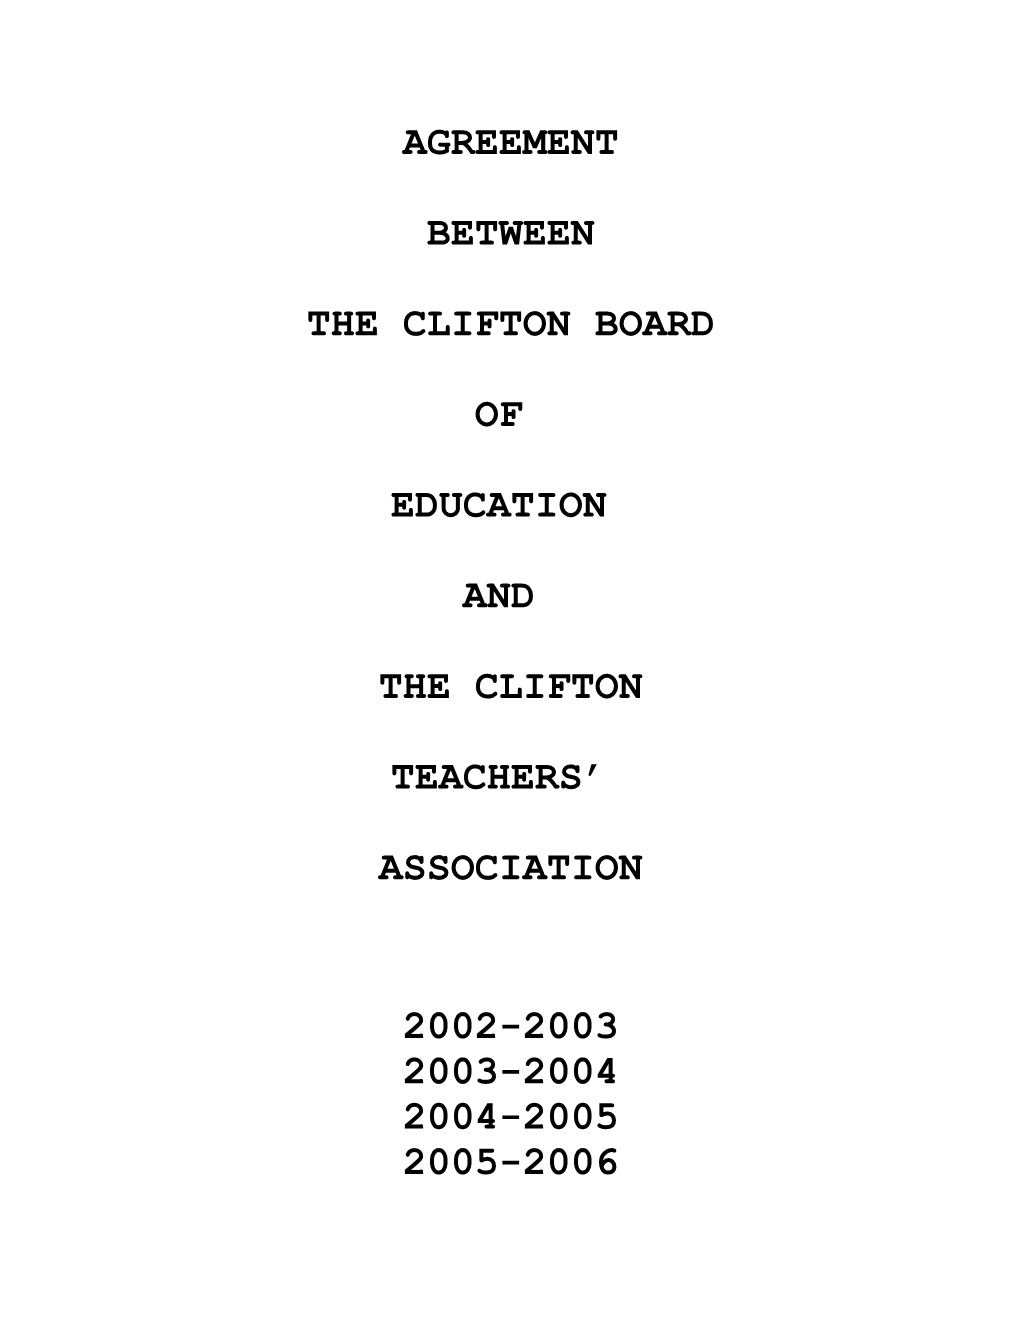 The Clifton Board